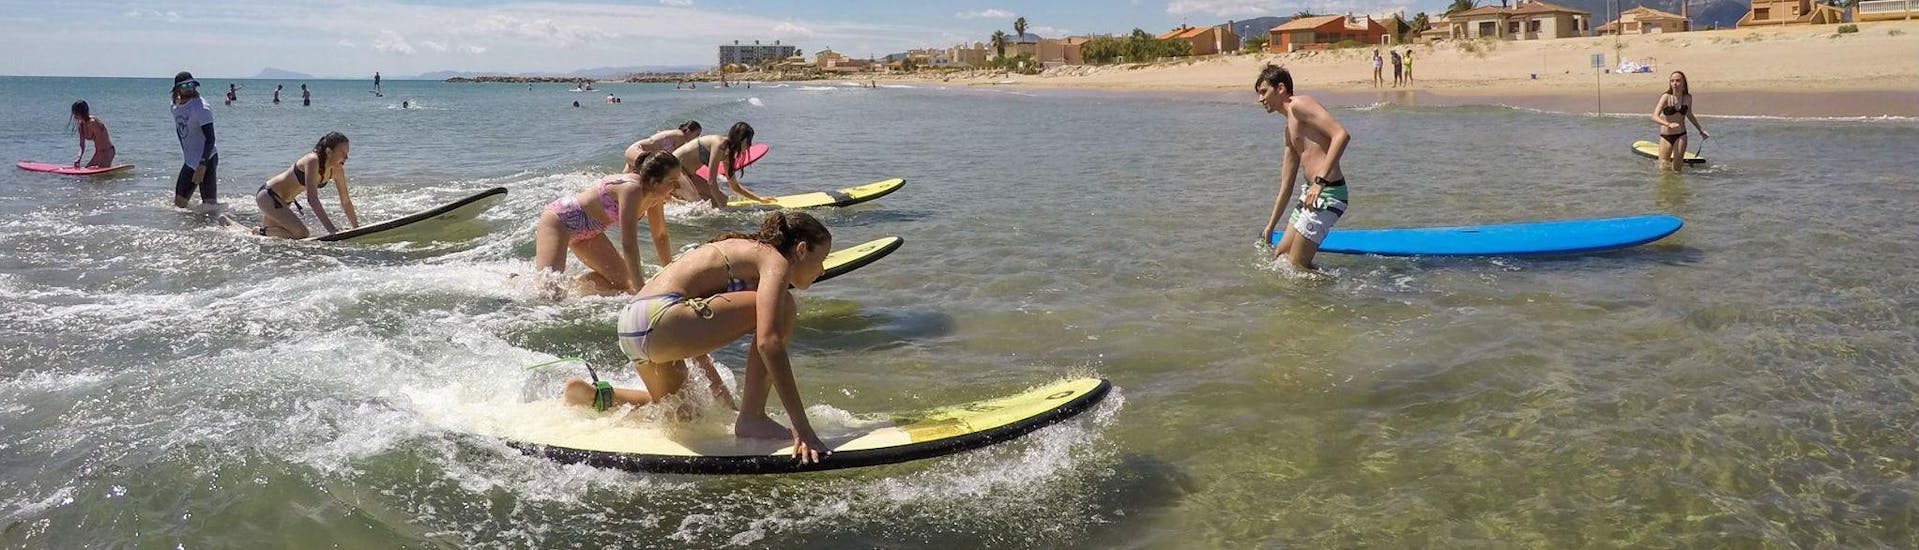 Lezioni private di surf da 4 anni per tutti i livelli.